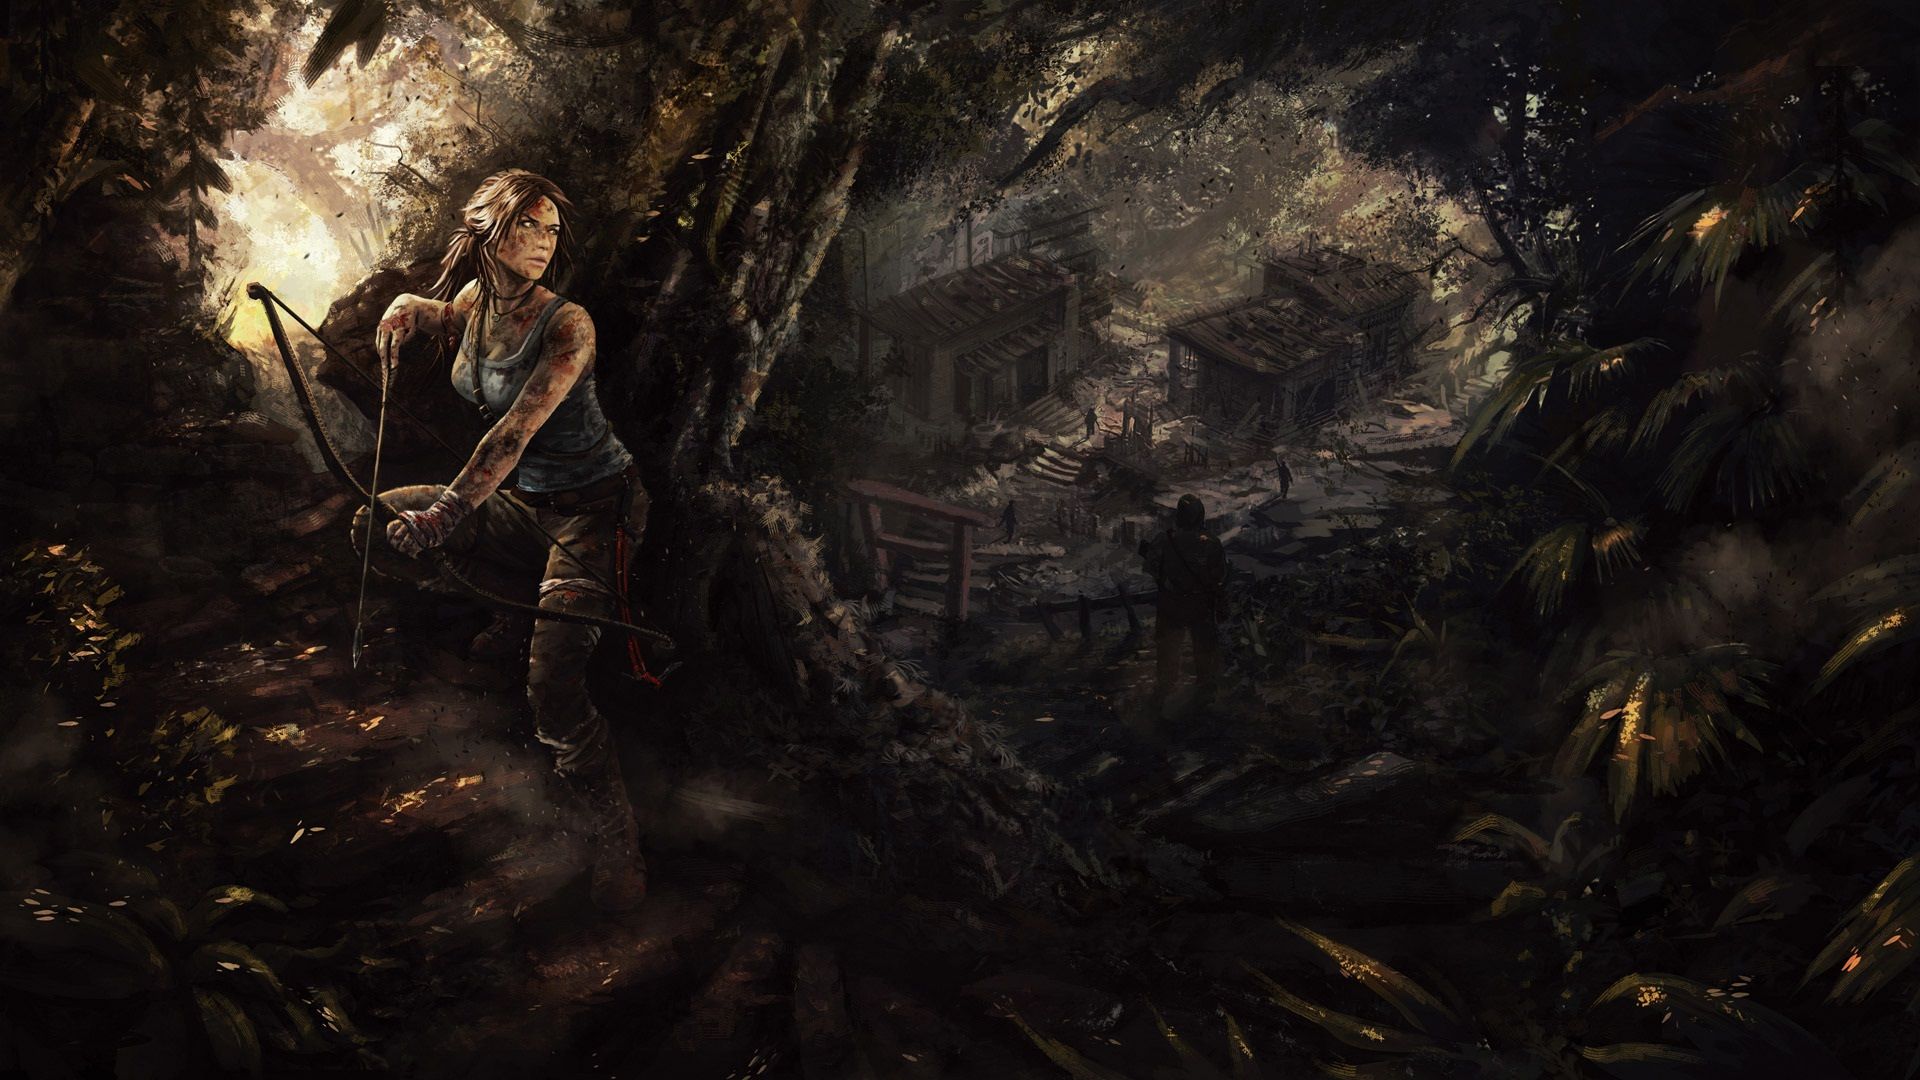 Tomb Raider 2015 Wallpapers HD - Wallpaper Cave